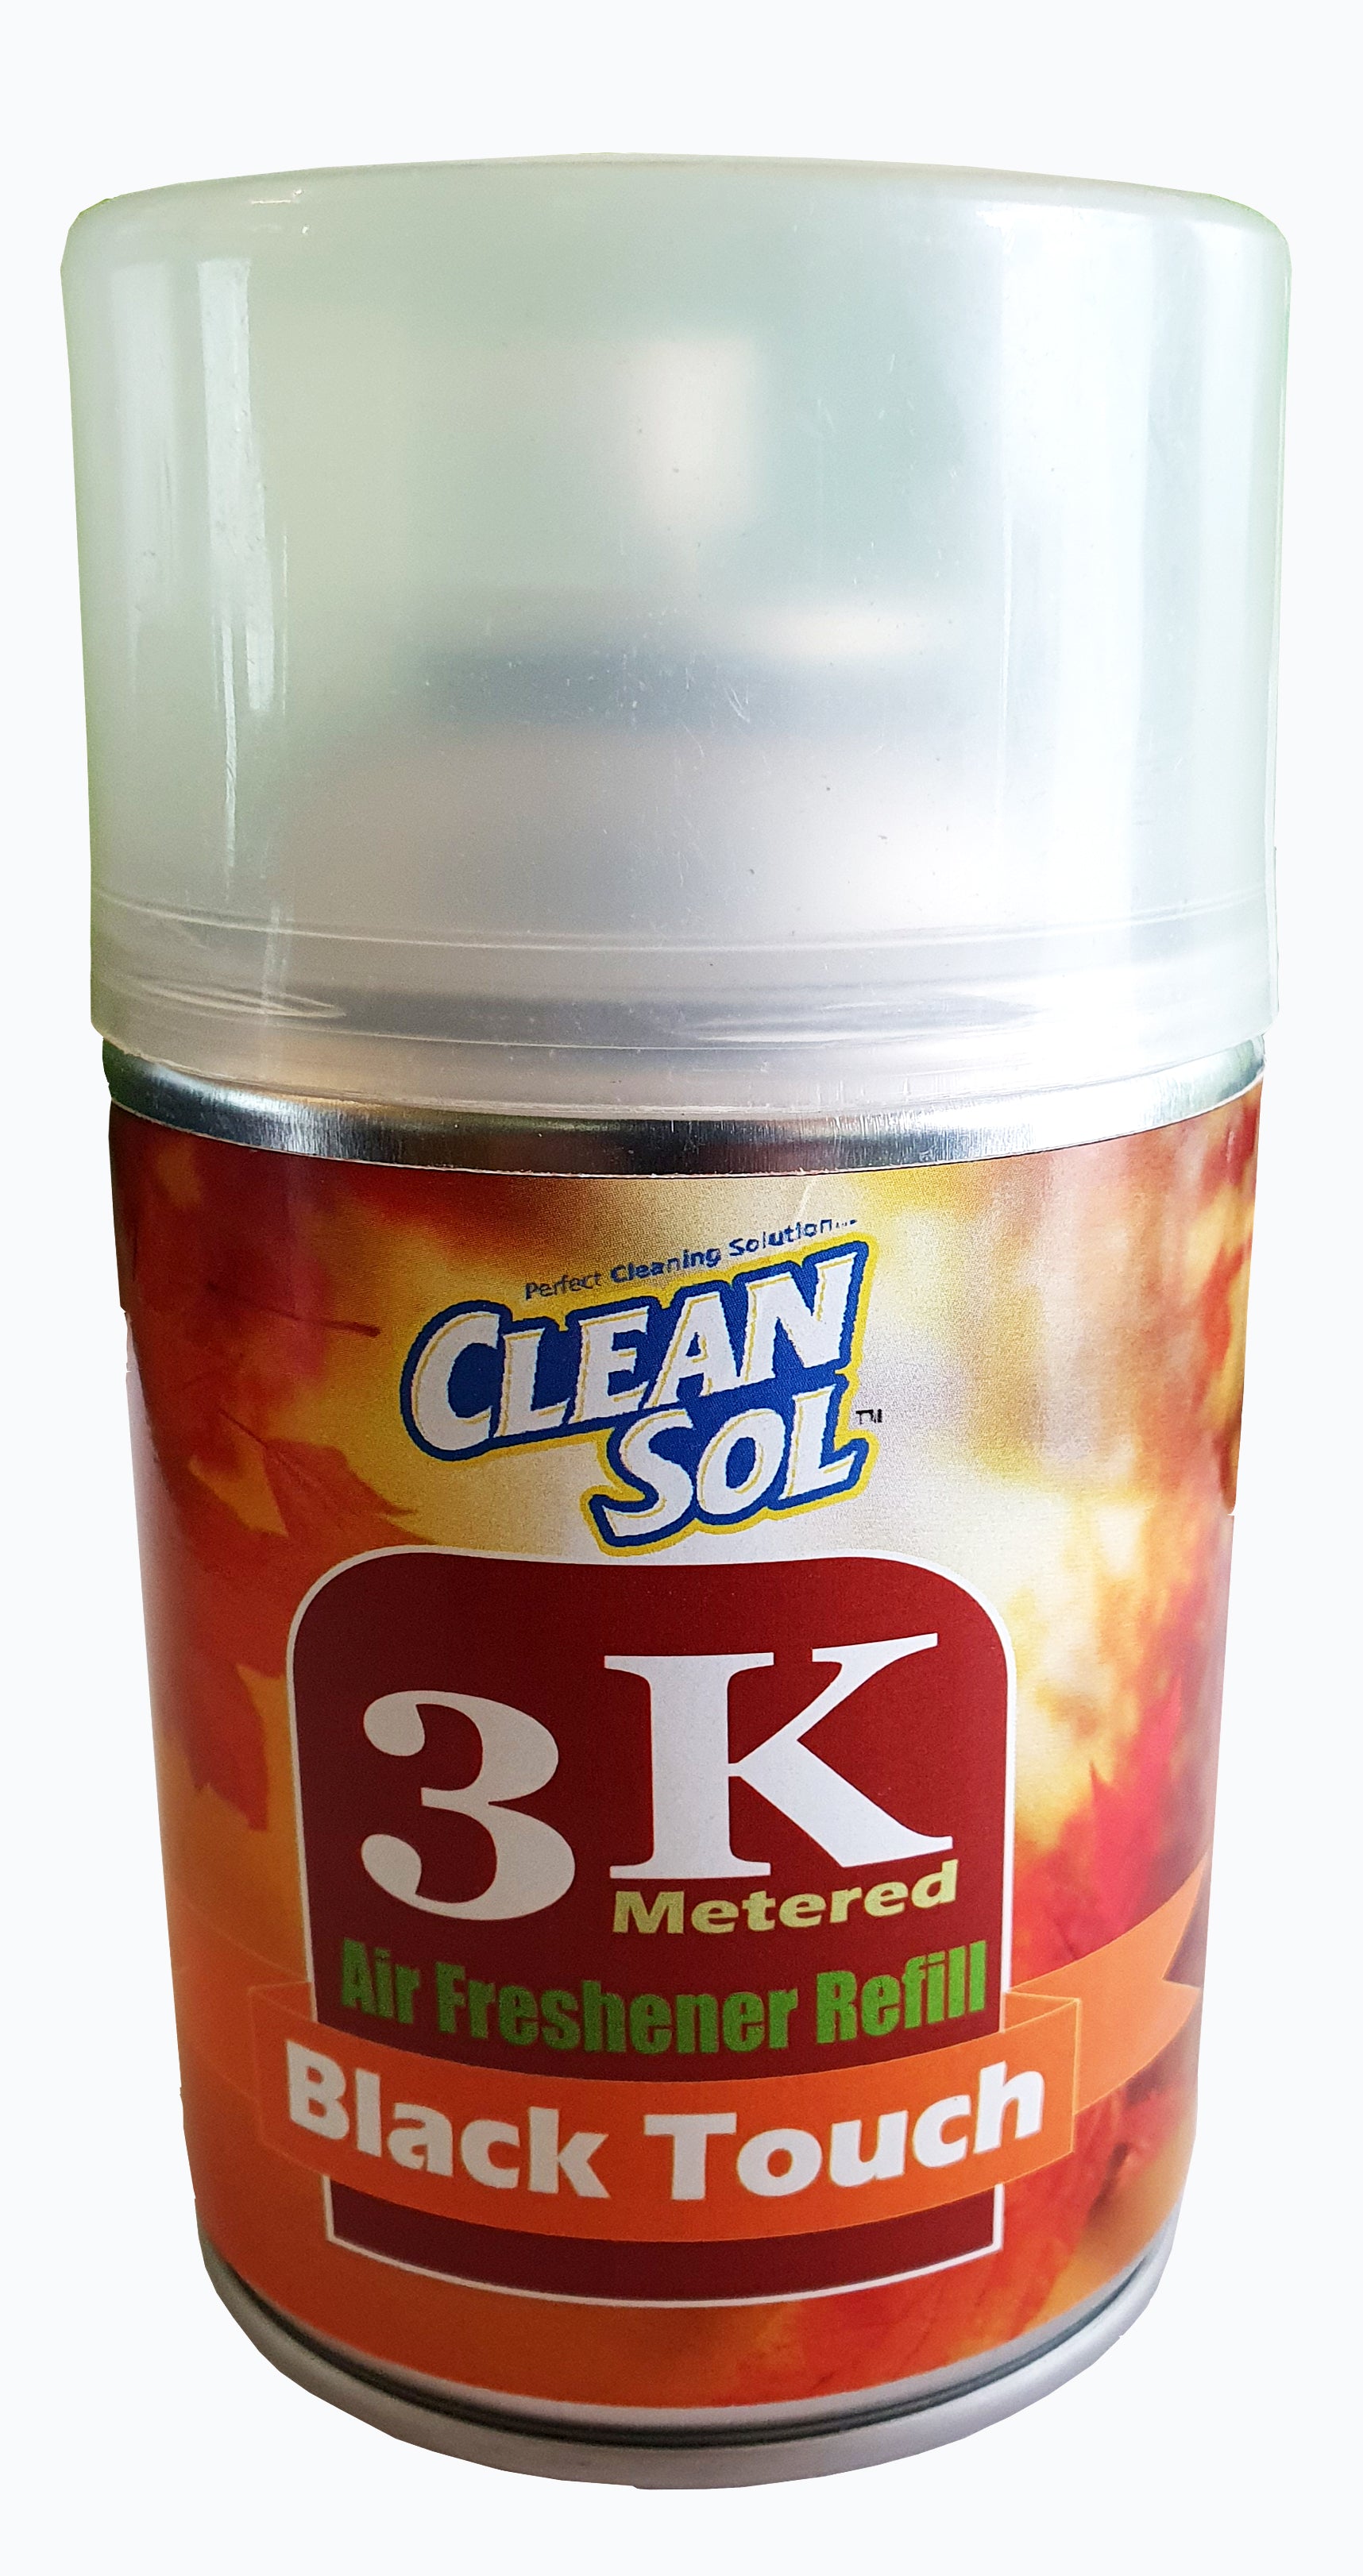 Cleansol 3K metered Shot Air freshener